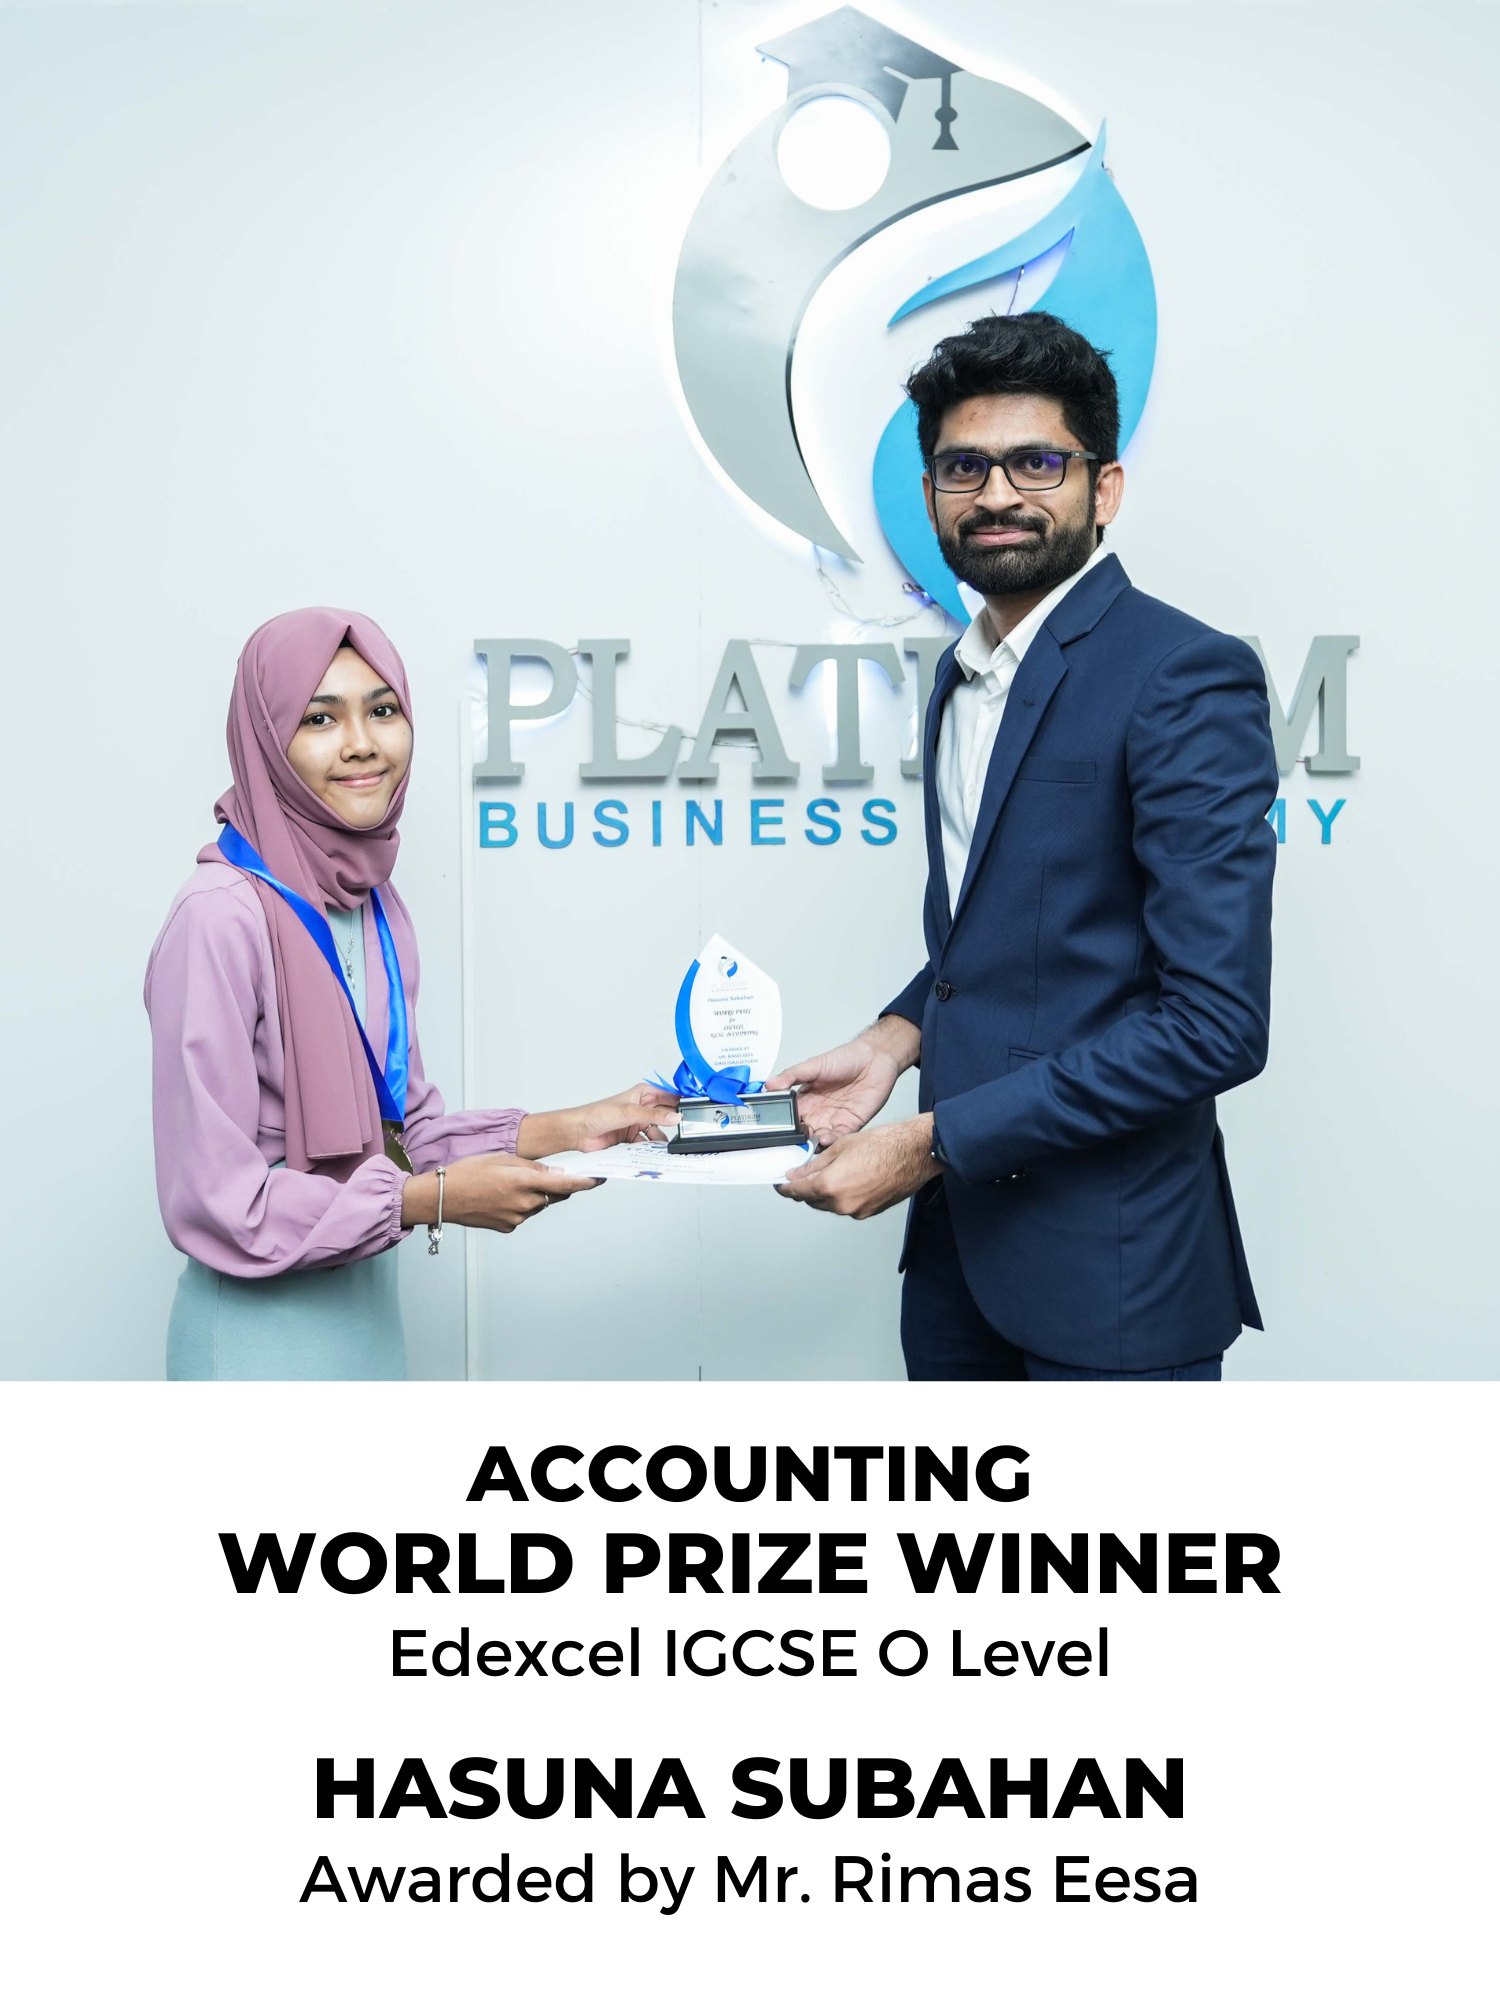 Edexcel O'Level Accounting World Prize Winner: Hasuna Subahan
Lecturer: Mr. Rimas Eesa